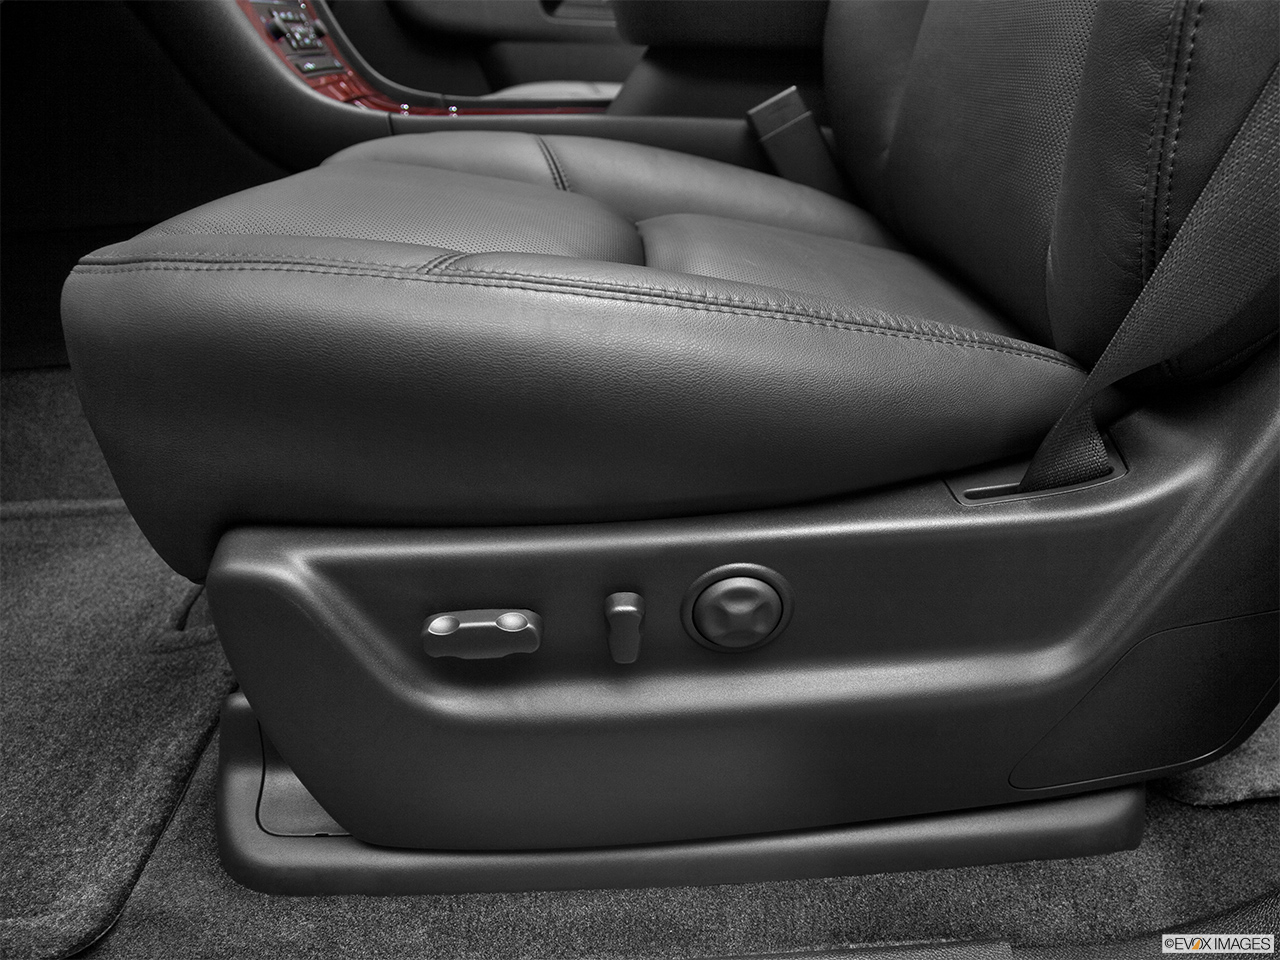 2012 Cadillac Escalade Hybrid Base Seat Adjustment Controllers. 